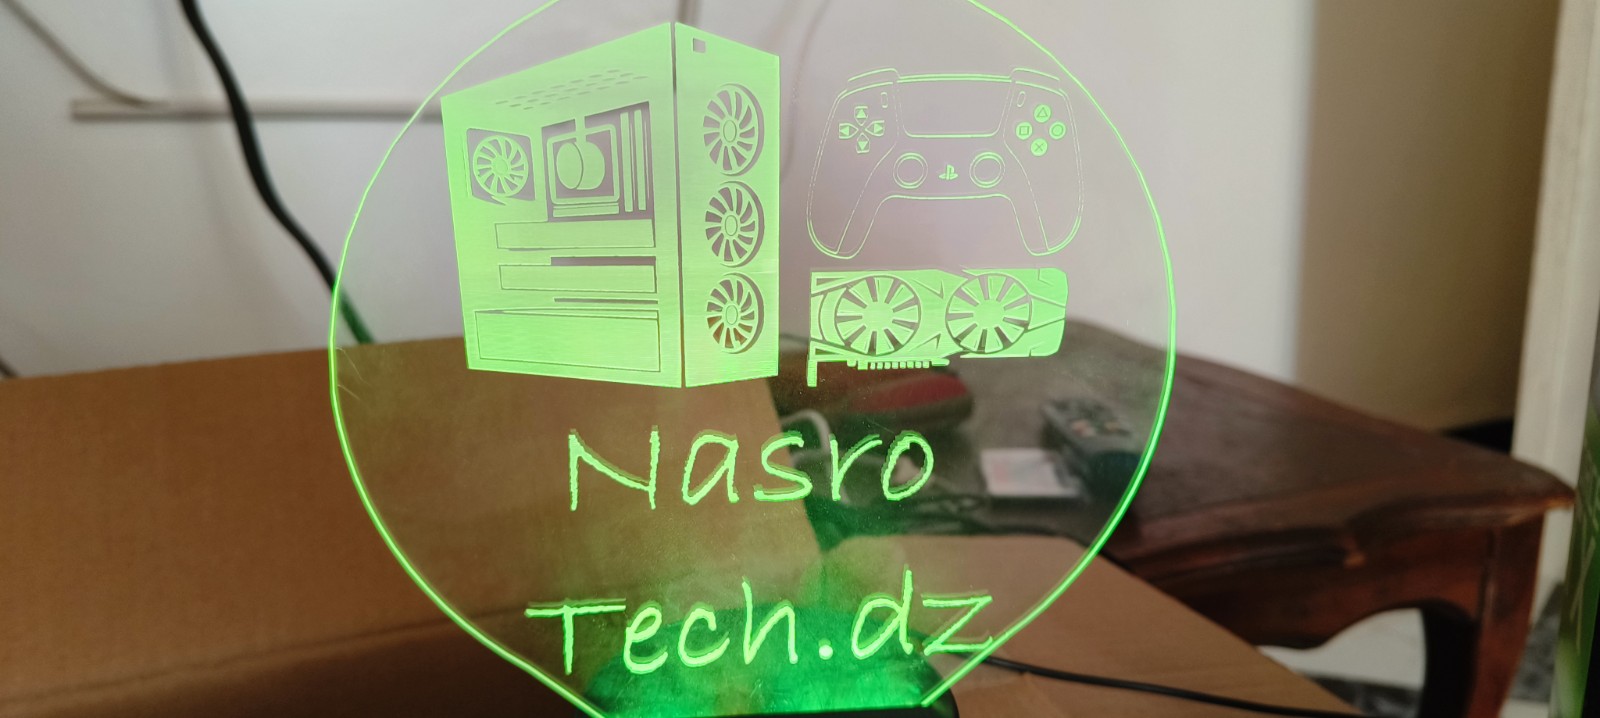 Nasro Tech dz